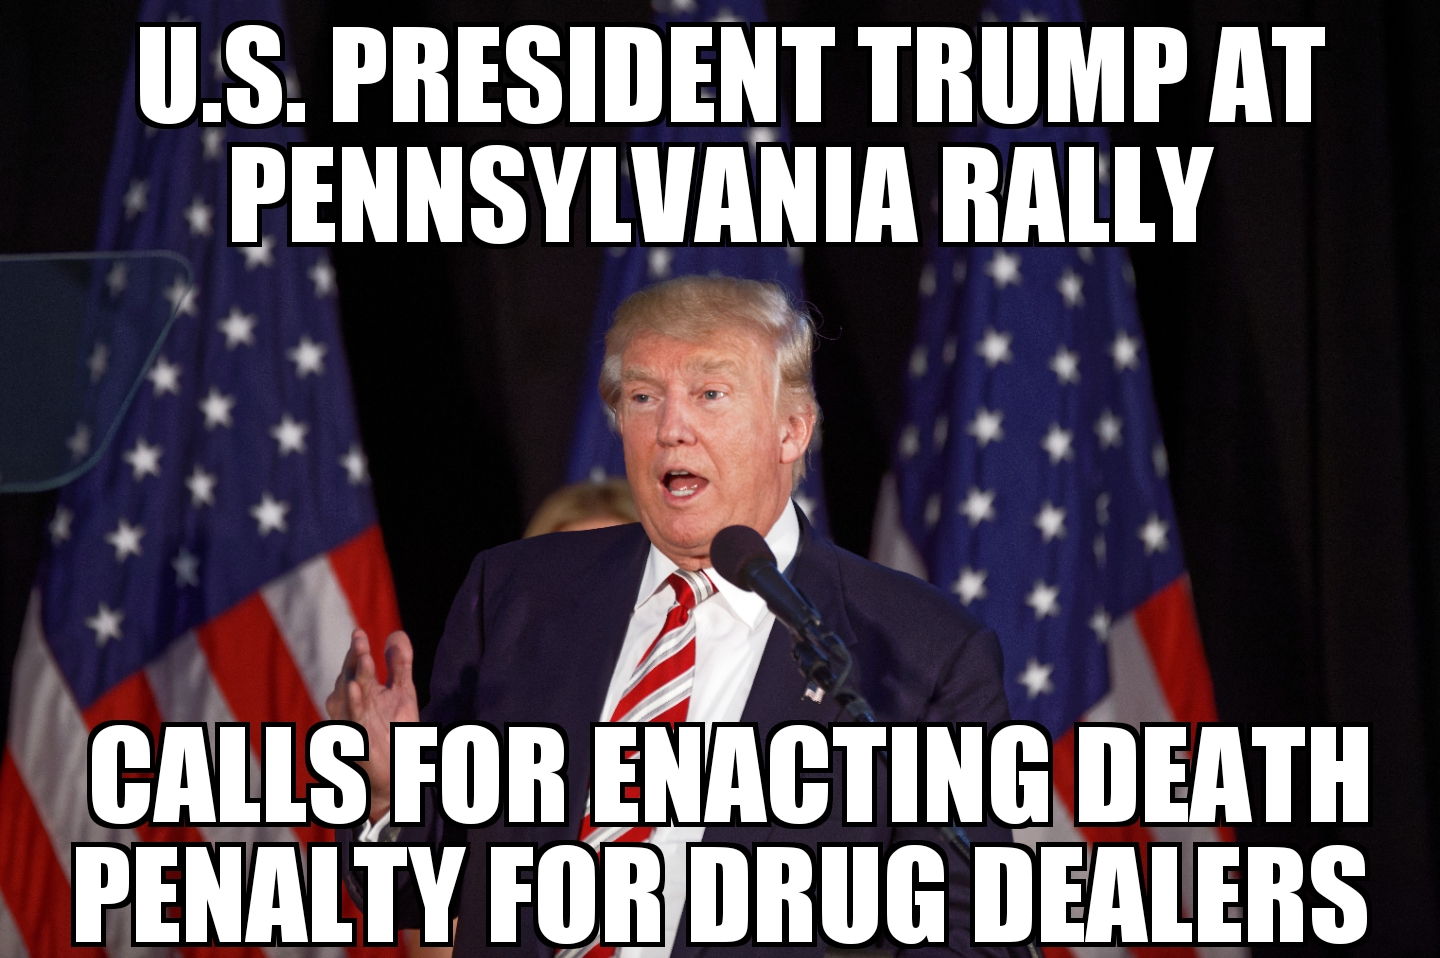 Trump suggests death penalty for drug dealers